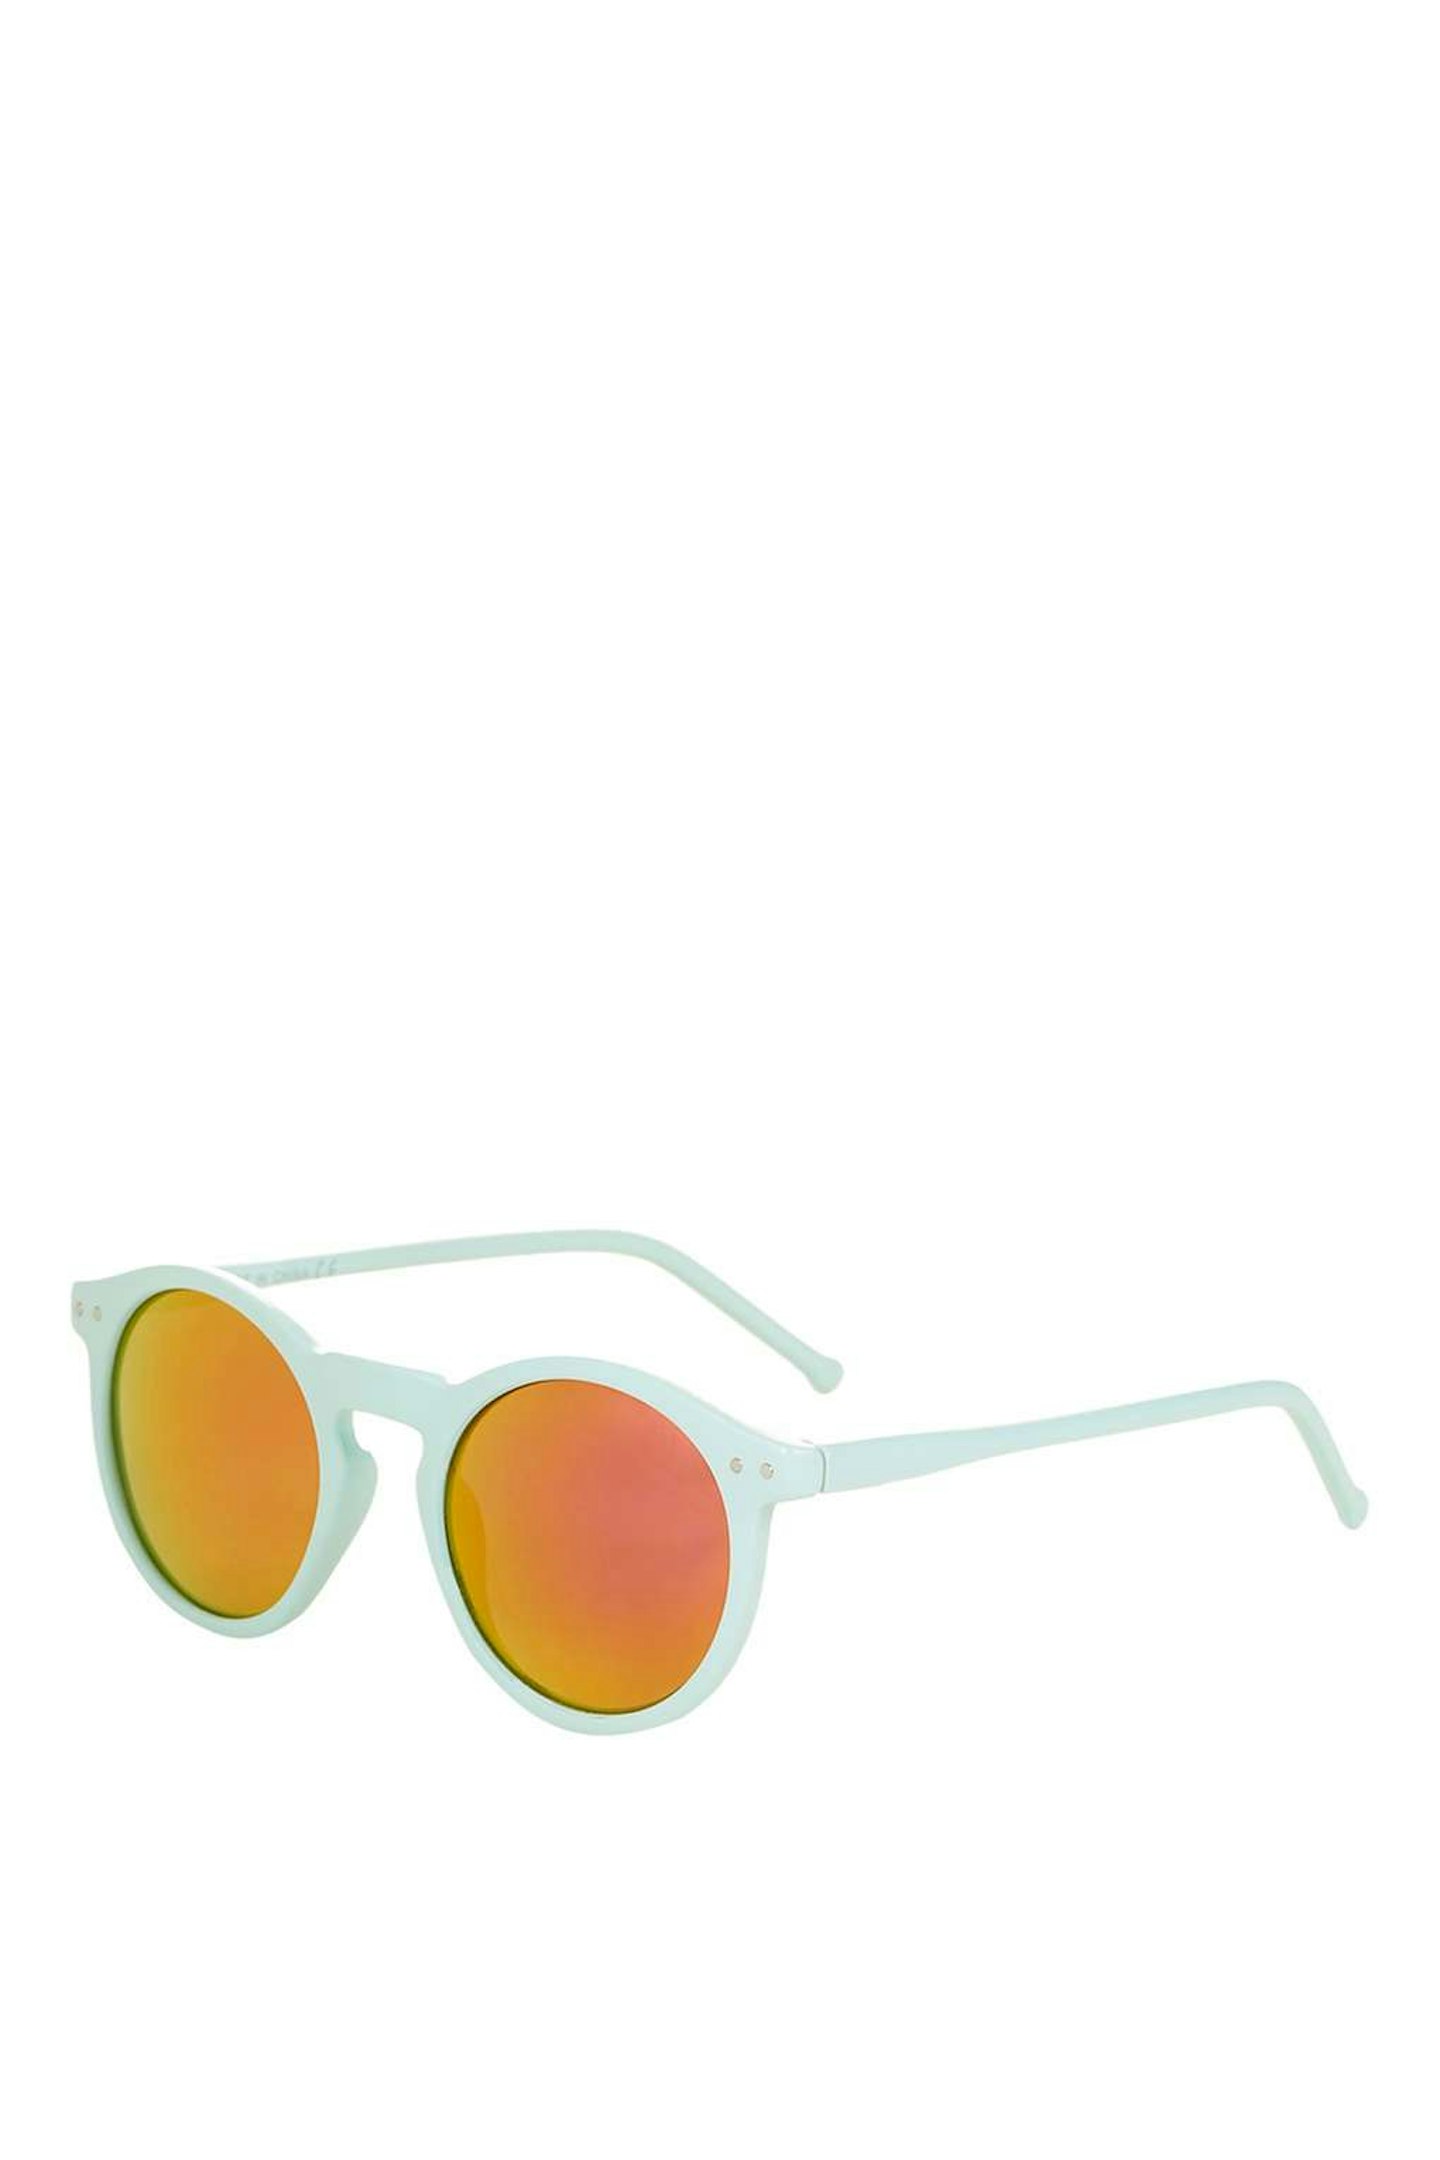 Sunglasses Summer 2016 UK